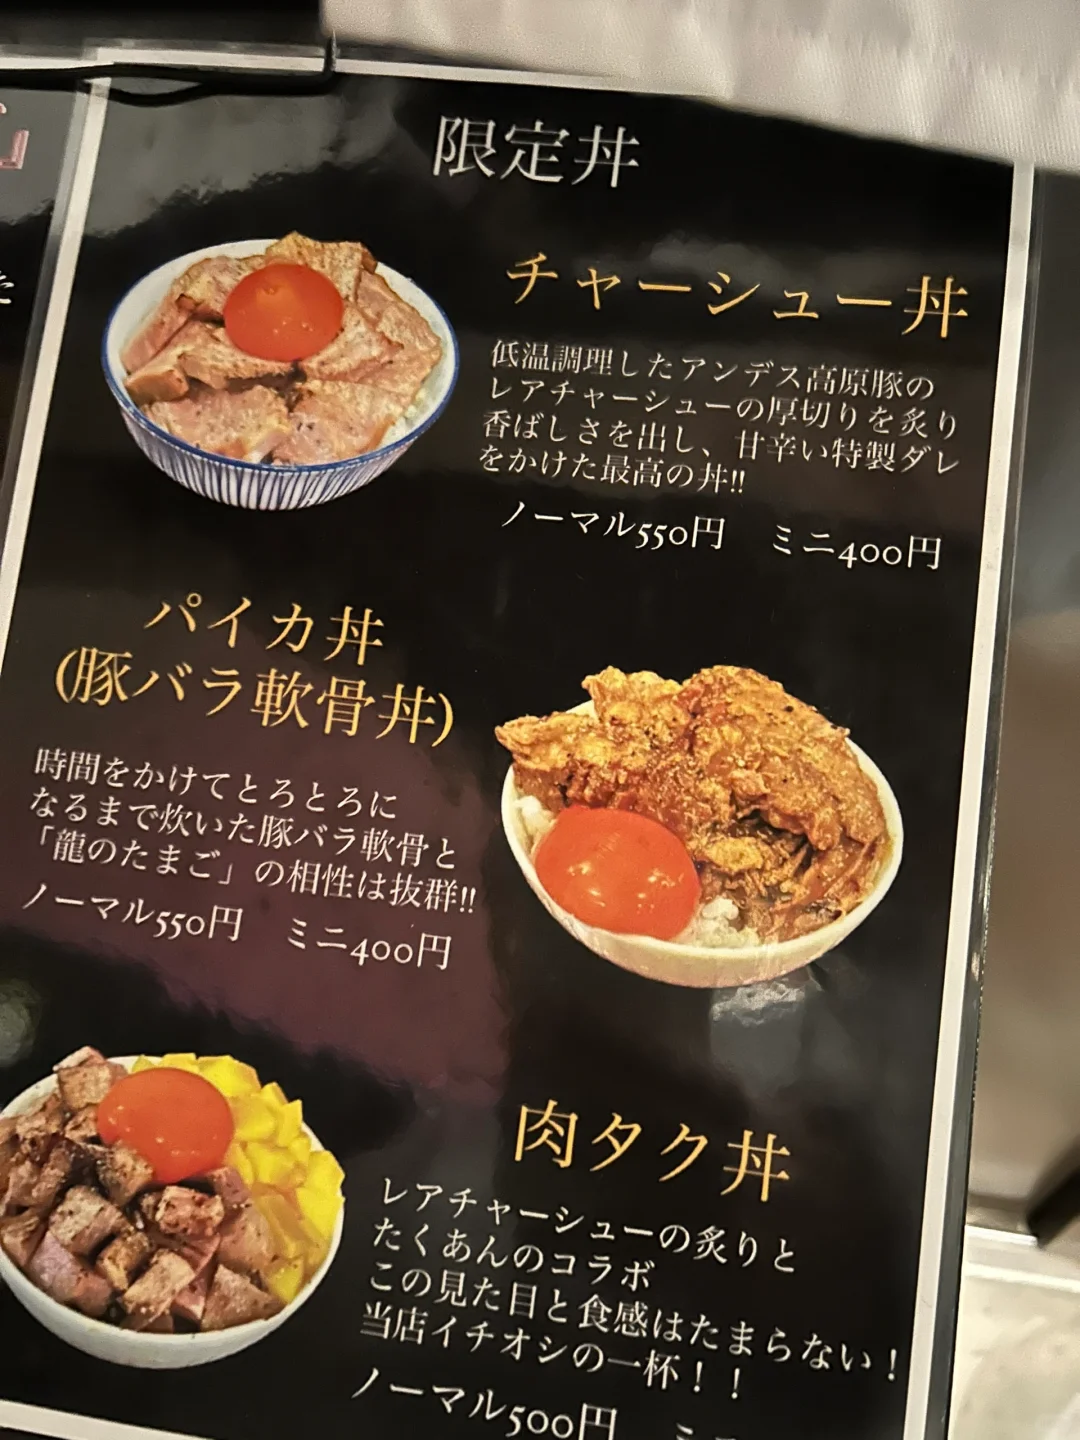 Osaka-Chuka Soba Tsuji 中华そば Tsuji, recommended for the best ramen in Osaka